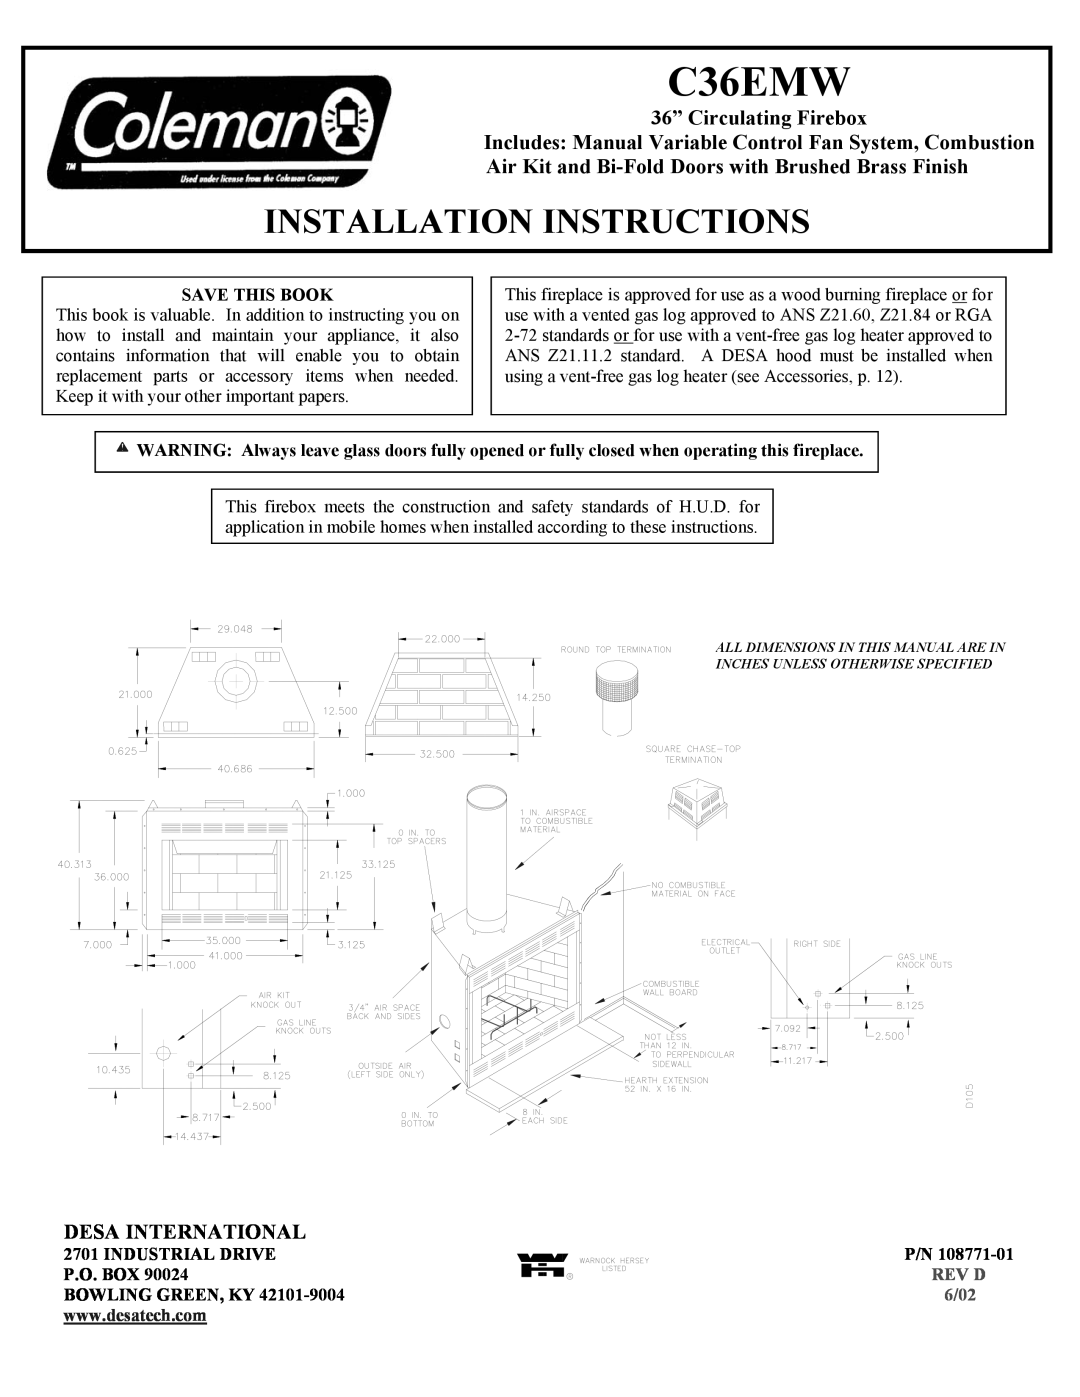 Desa C36EMW installation instructions 36” Circulating Firebox, Desa International, Installation Instructions, REV D 6/02 